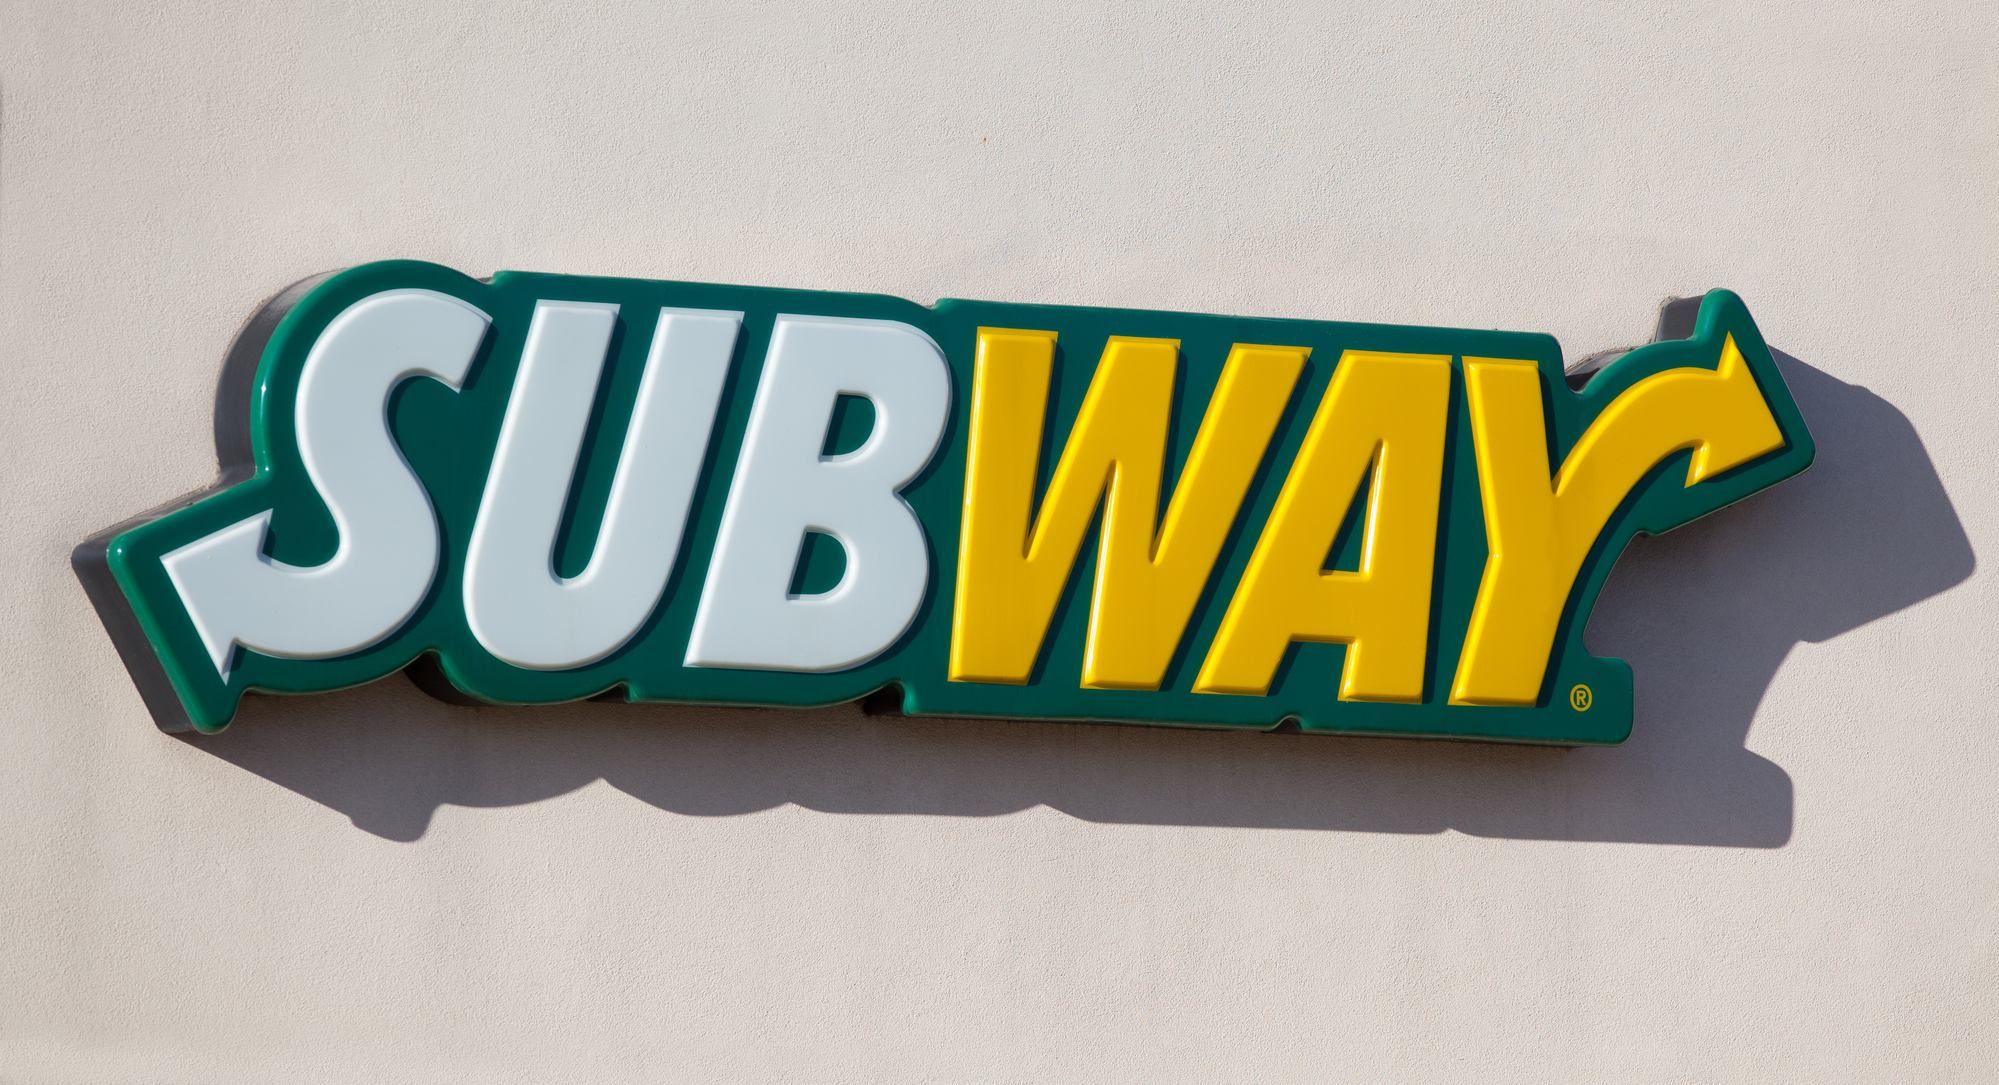 Subway sign regarding the Subway's tuna Sandwich class action lawsuit 